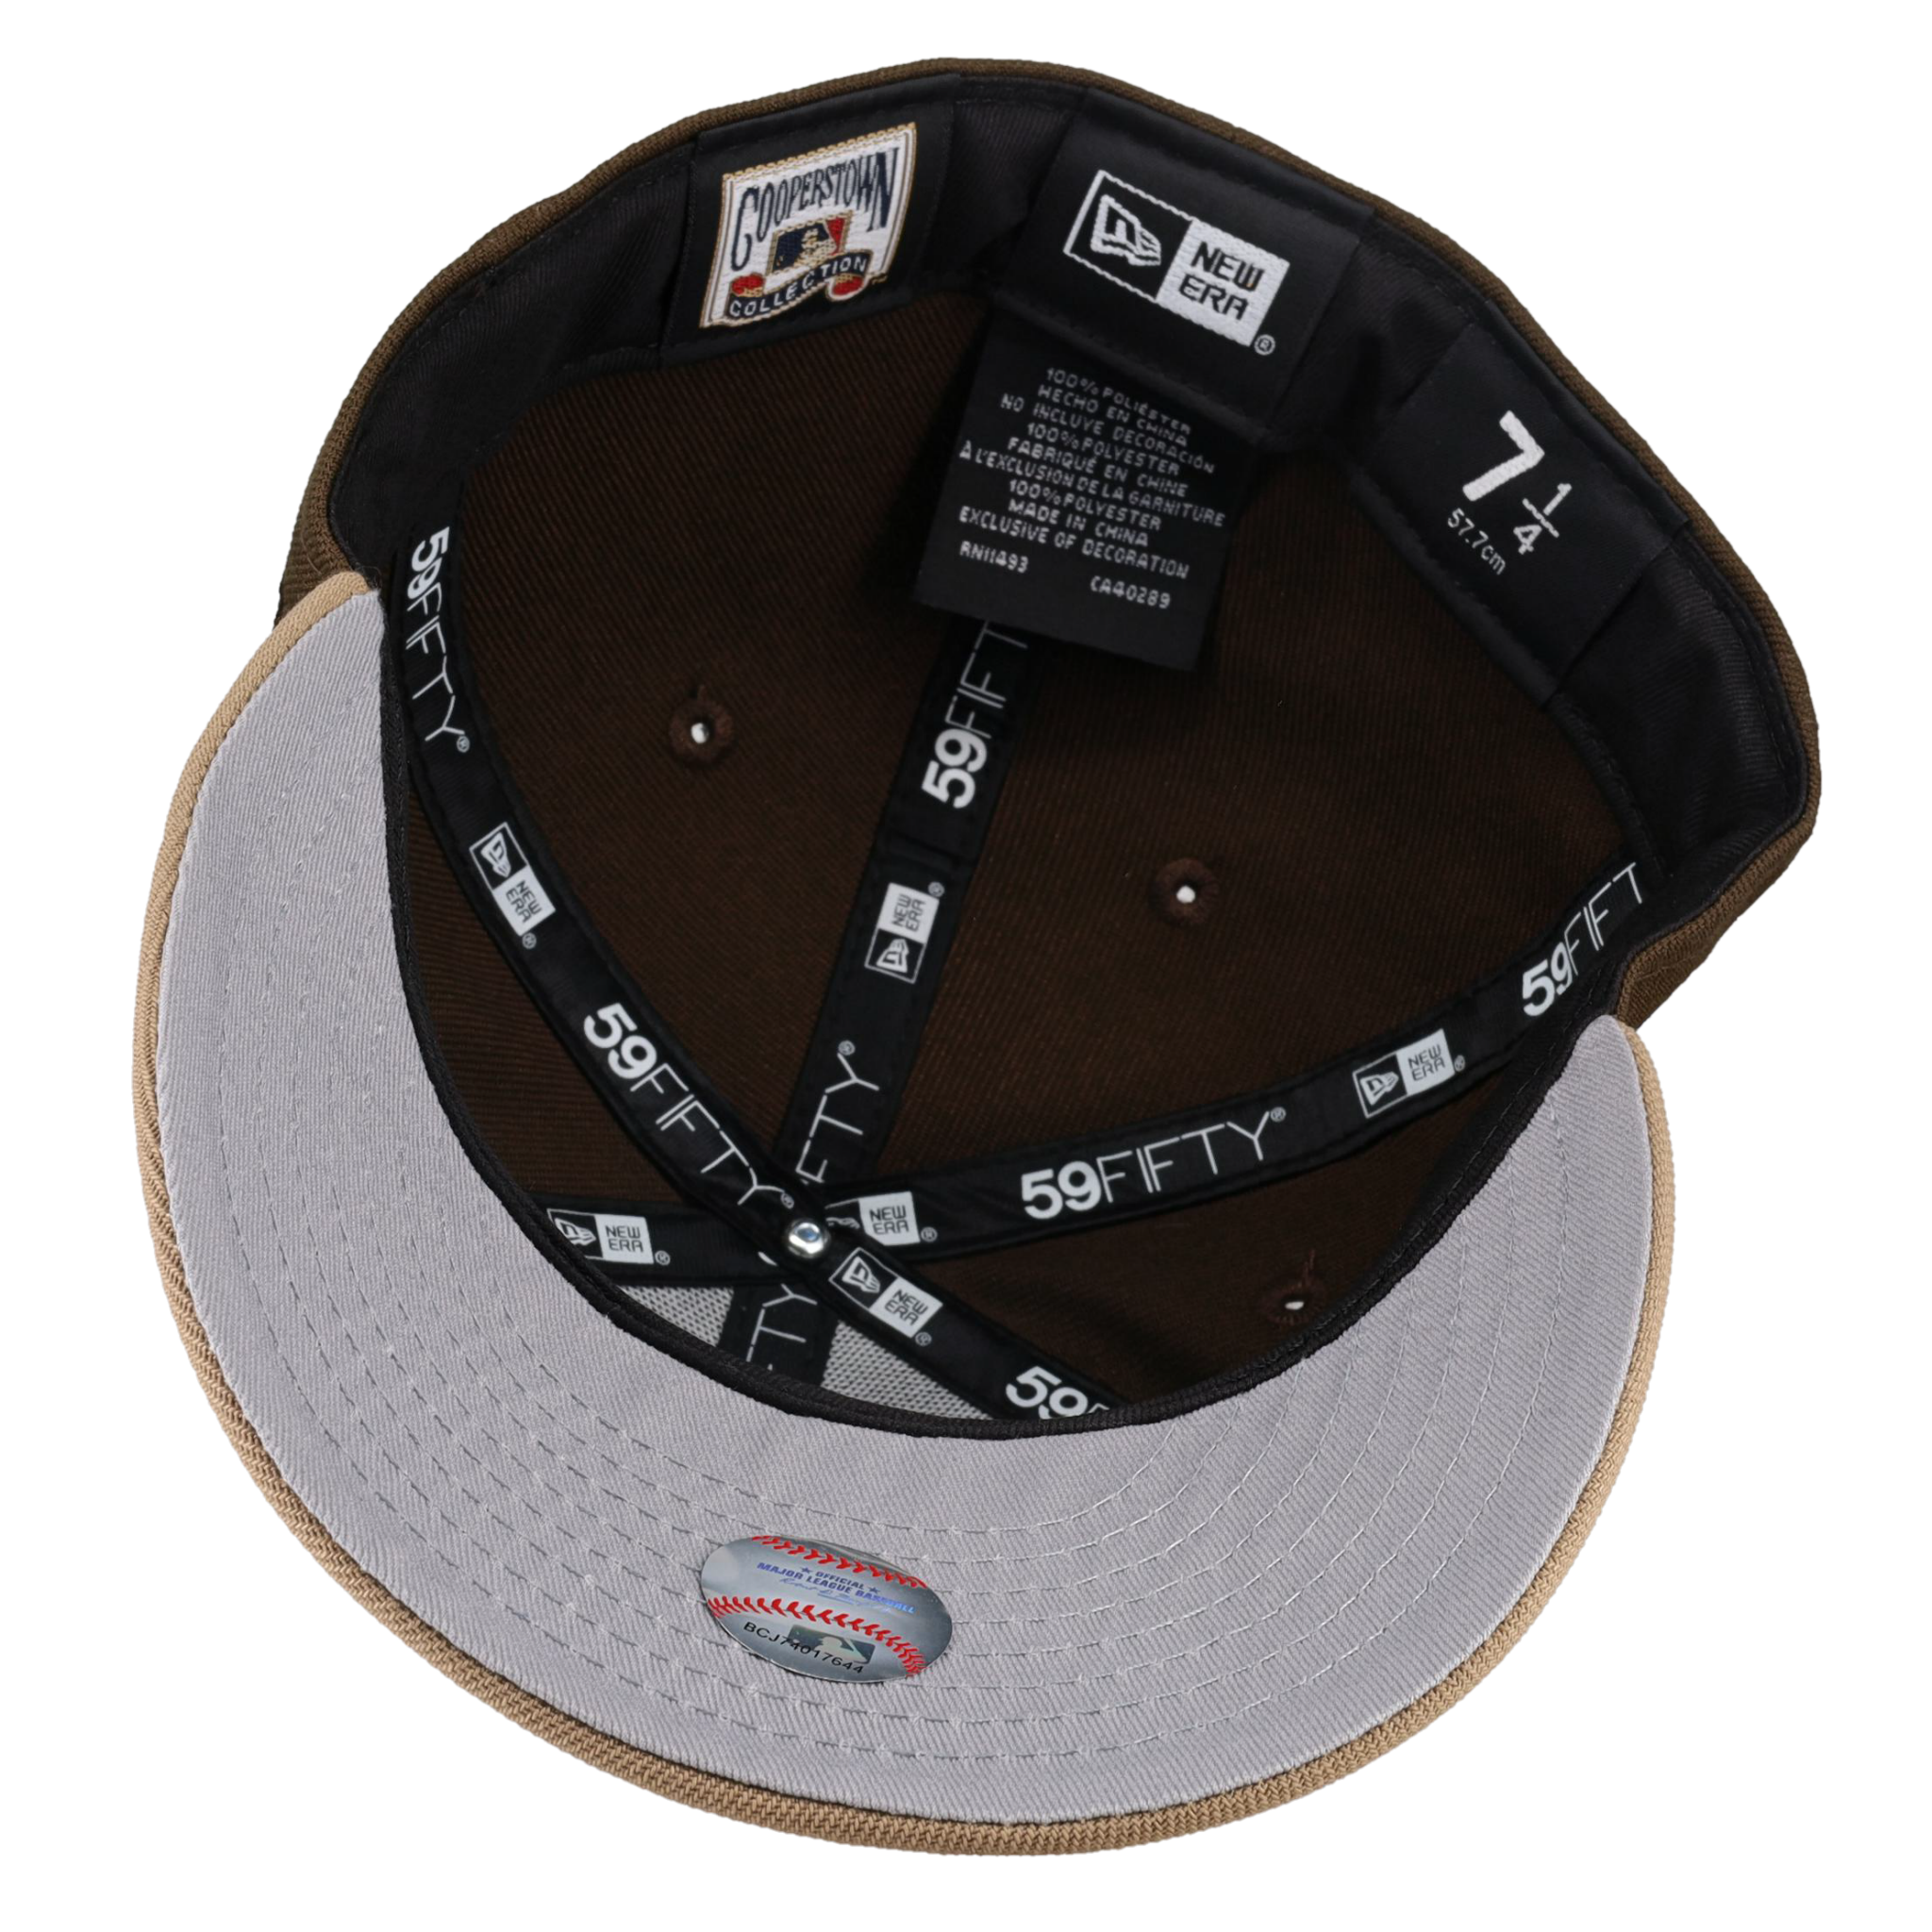 Houston Astros Spider Web 45 Years Walnut/Khaki Fitted Hat